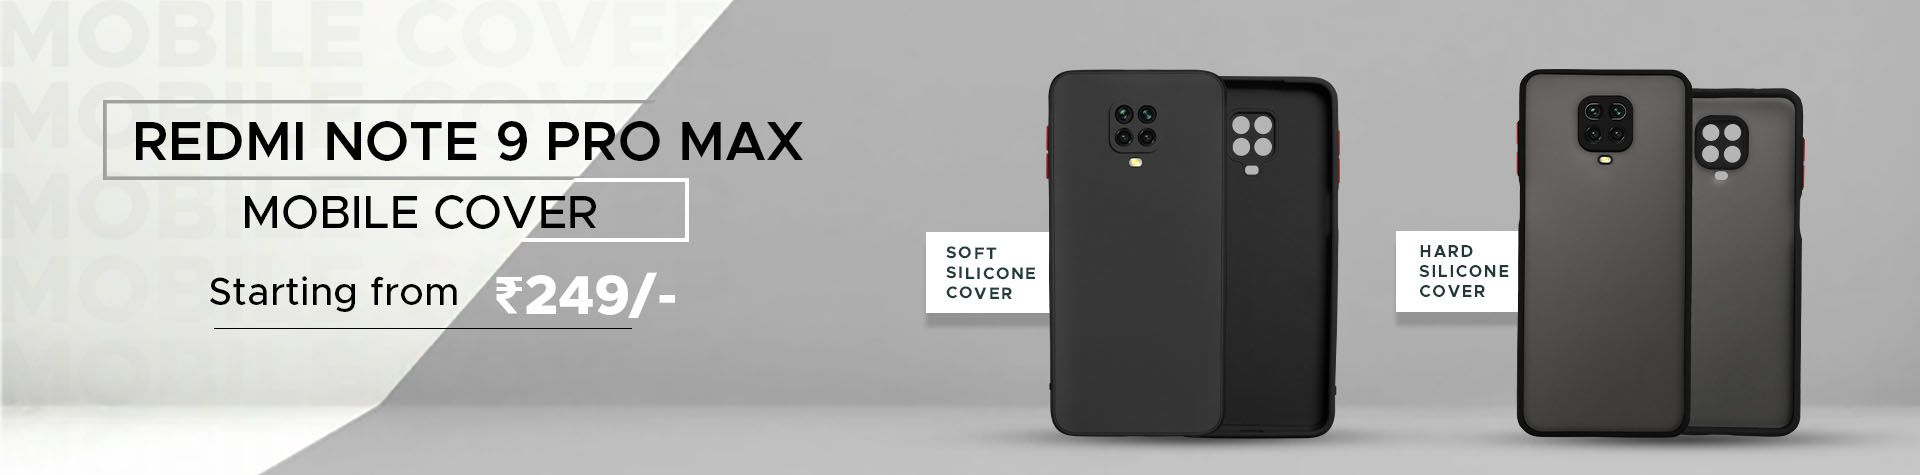 Redmi Note 9 Pro Max Cover and Cases